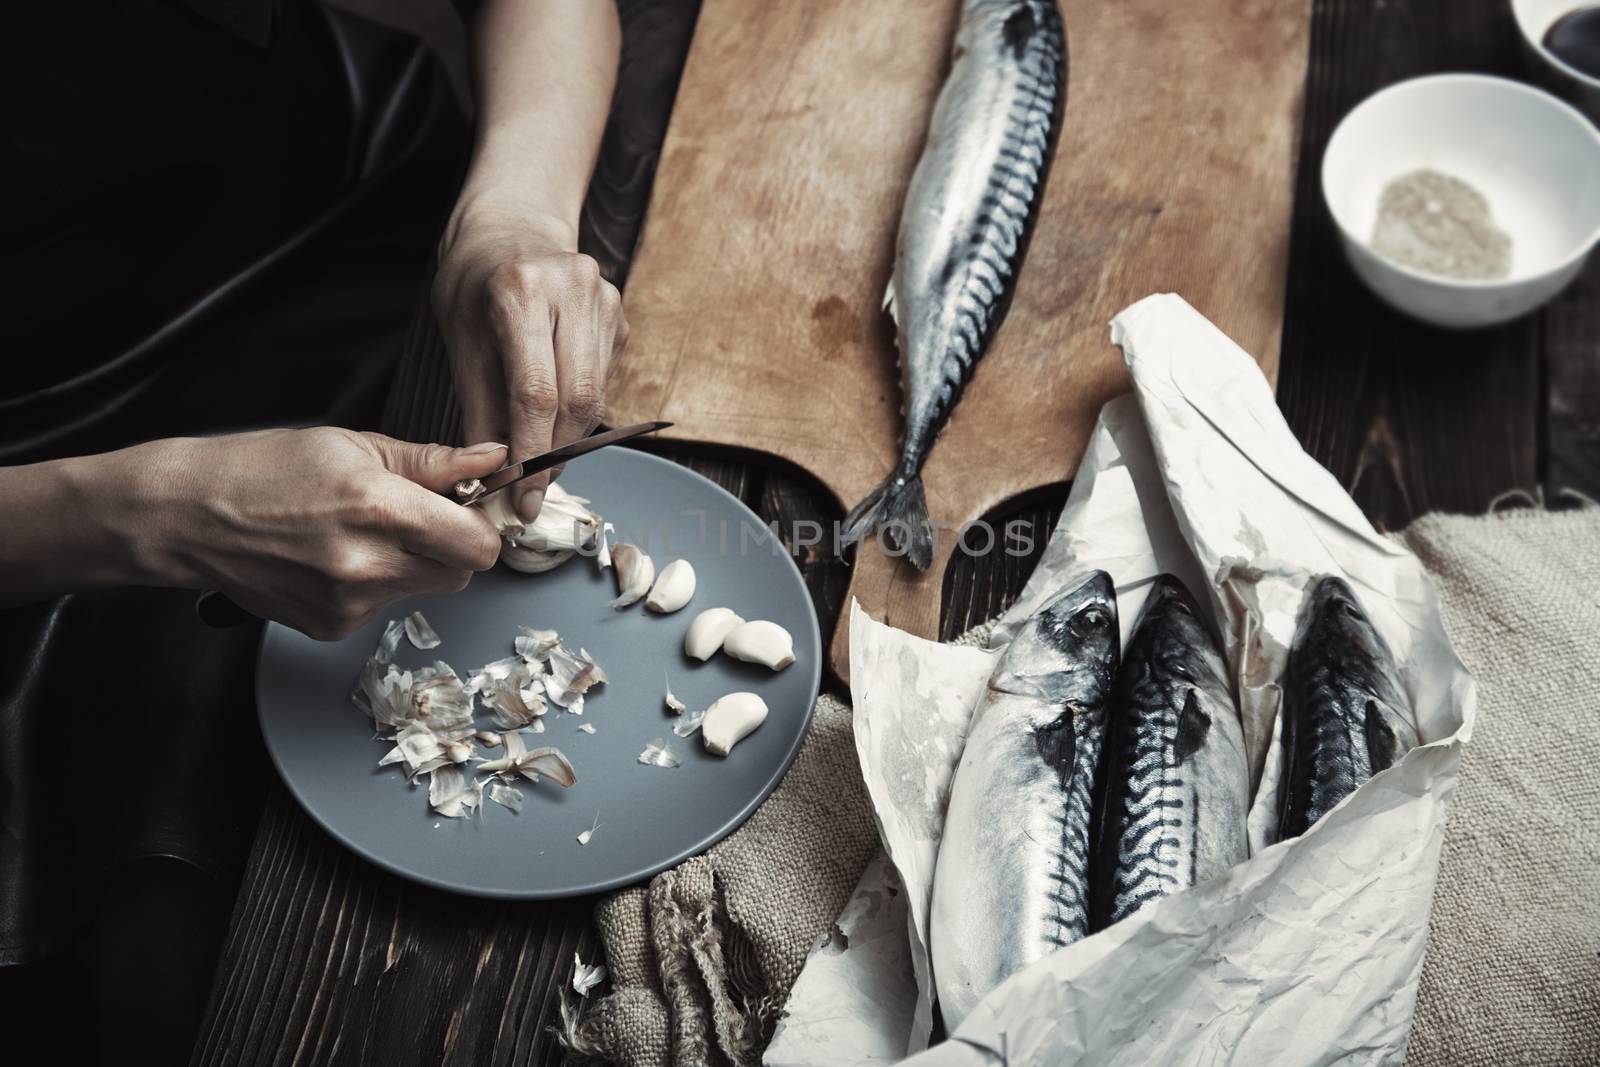 Woman preparing mackerel fish by Novic